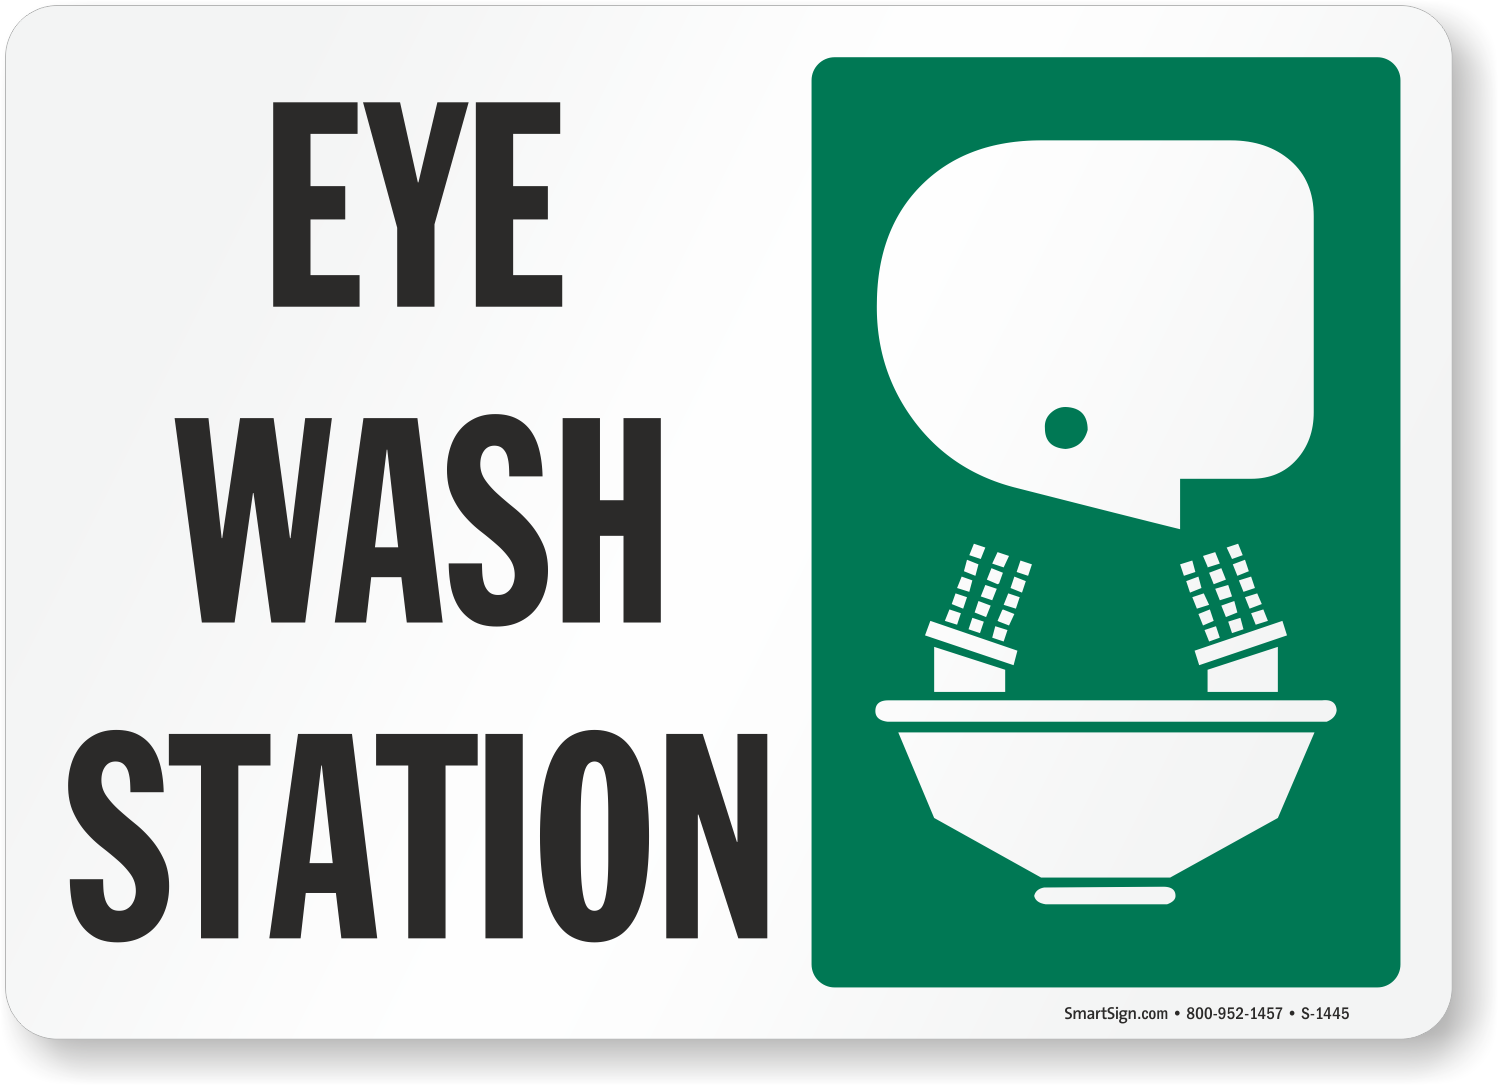 Eyewash Station Sign with Graphic, SKU S1445